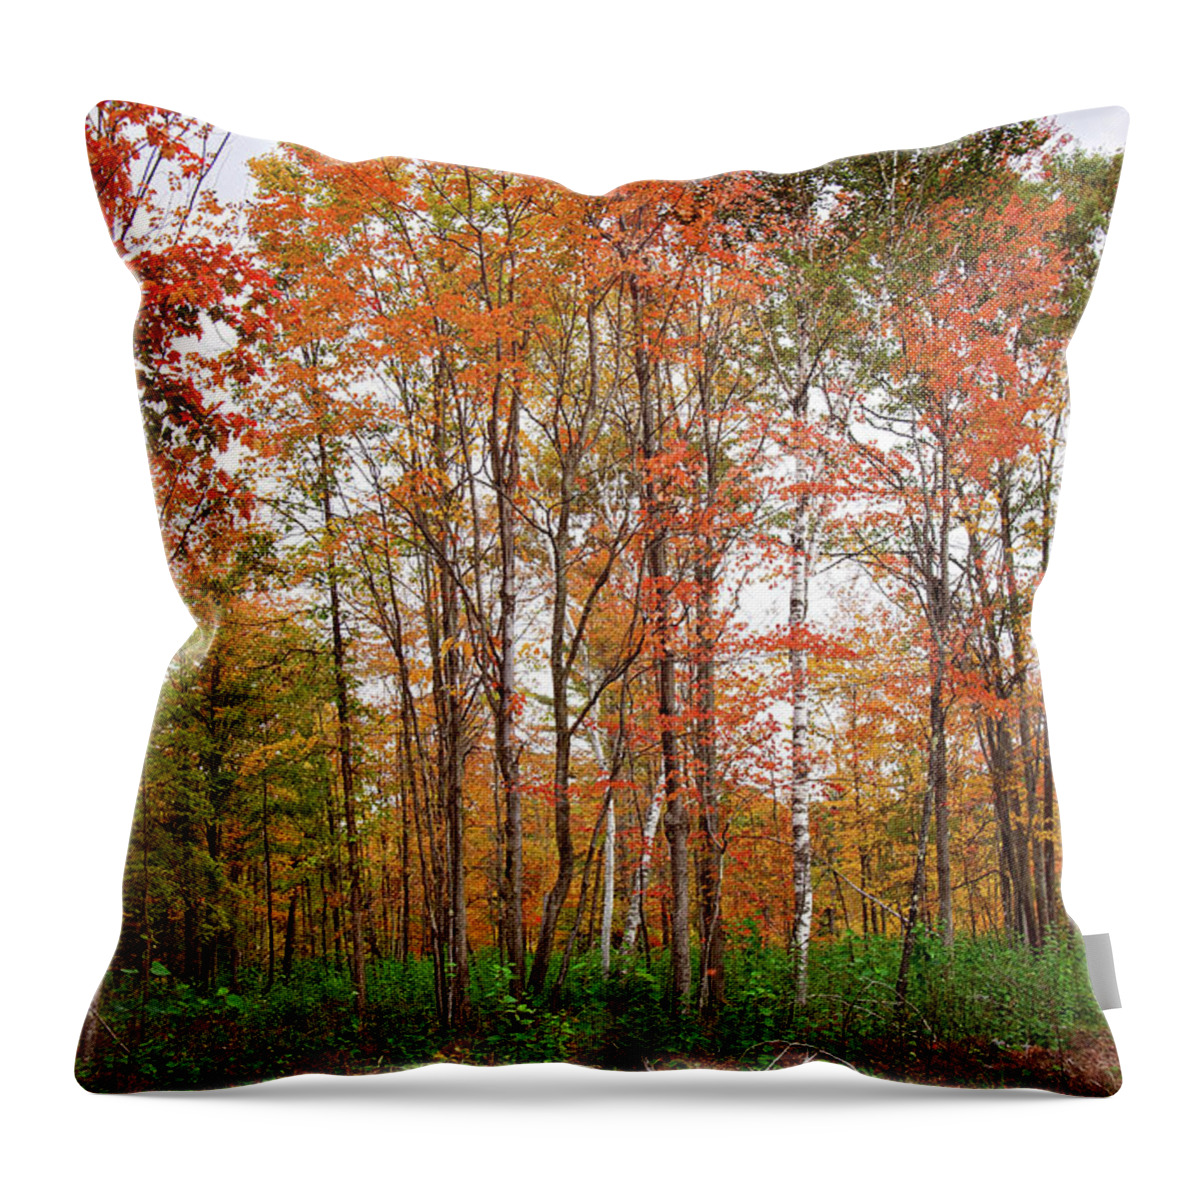 Fall Landscape Portrait Throw Pillow featuring the photograph Fall Landscape Portrait by Gwen Gibson